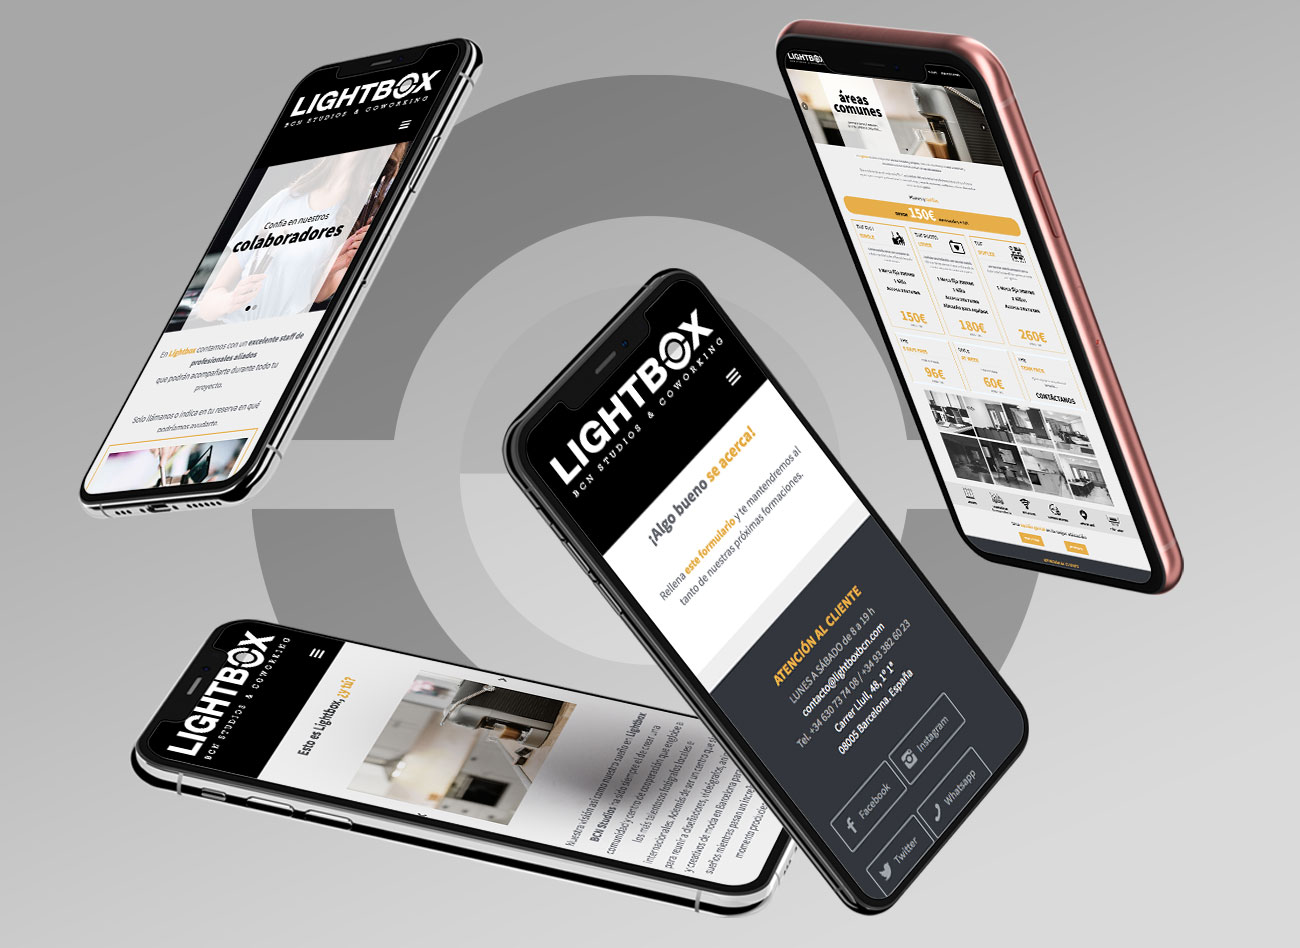 lightbox-web-iphone-espacio